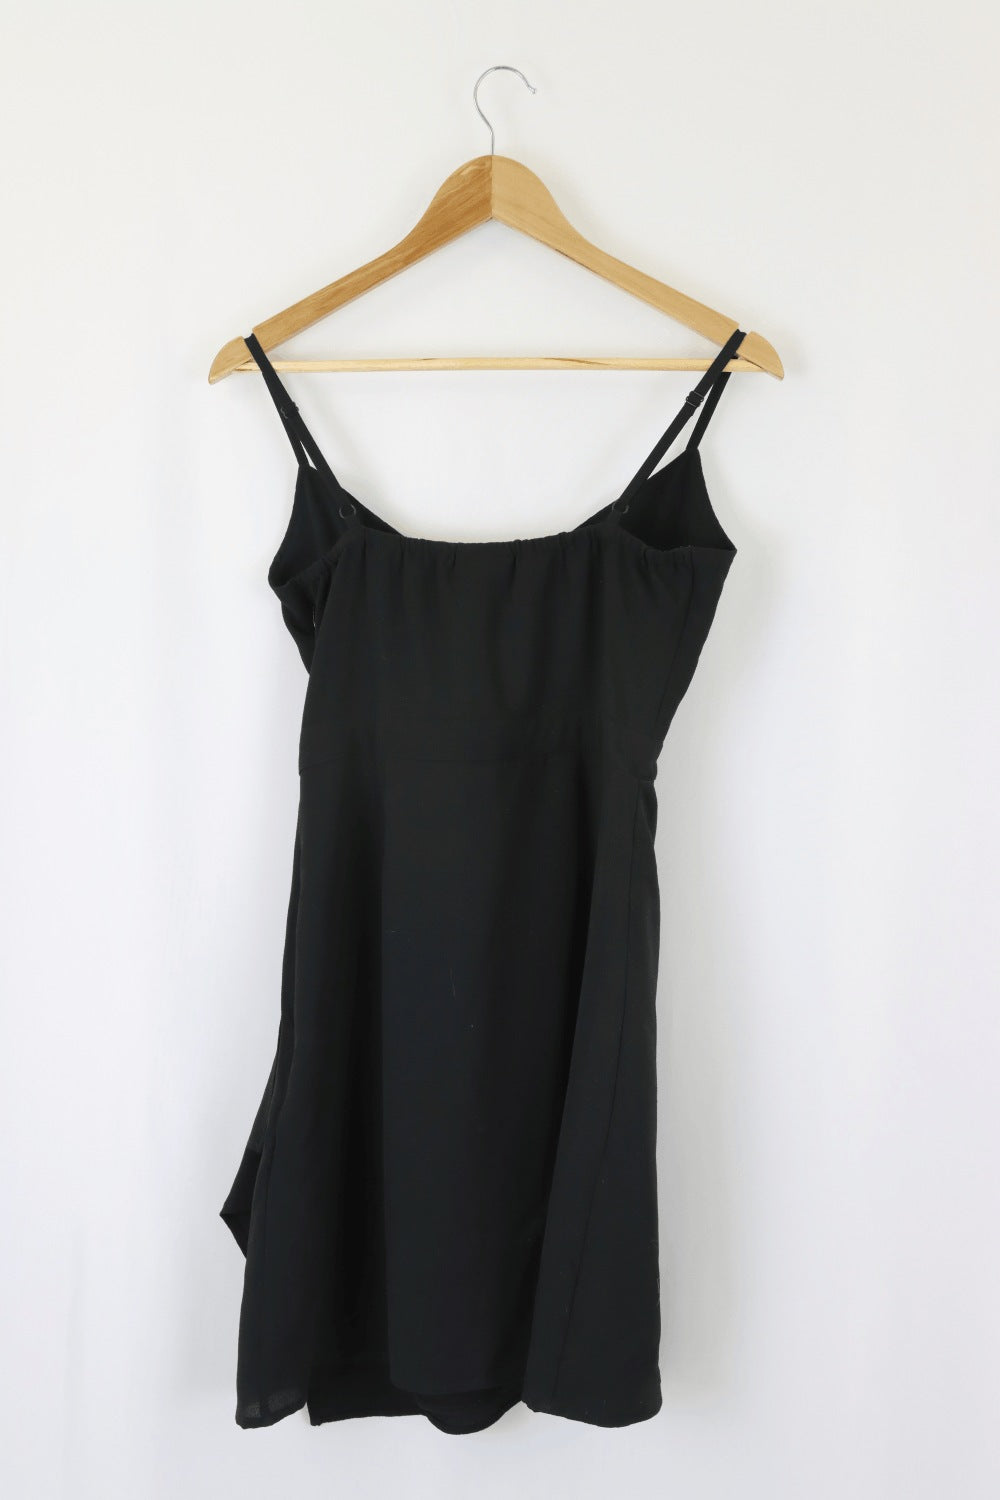 Jeanswest Black Dress 8